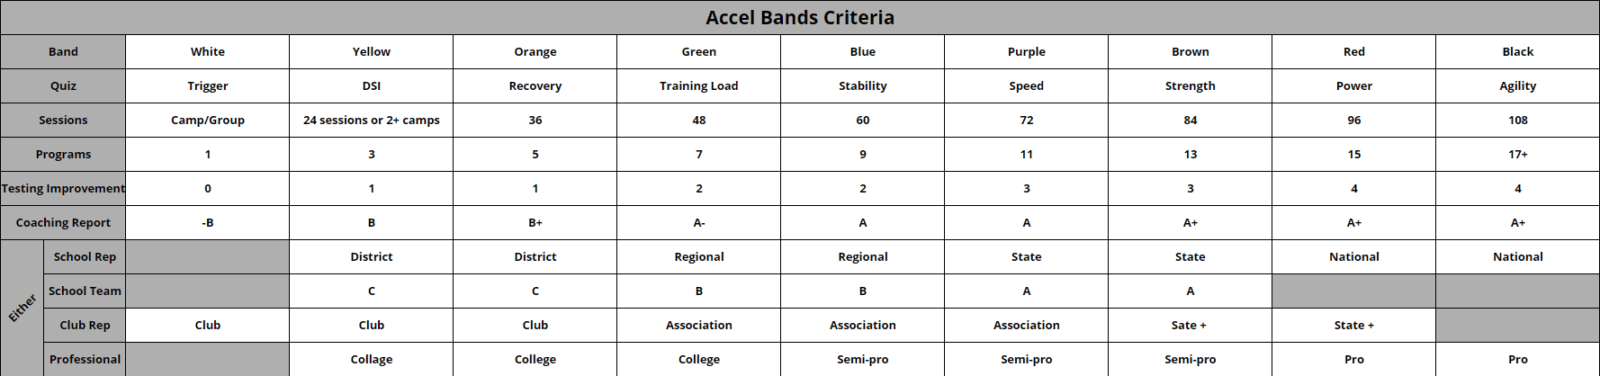 accel bands criteria